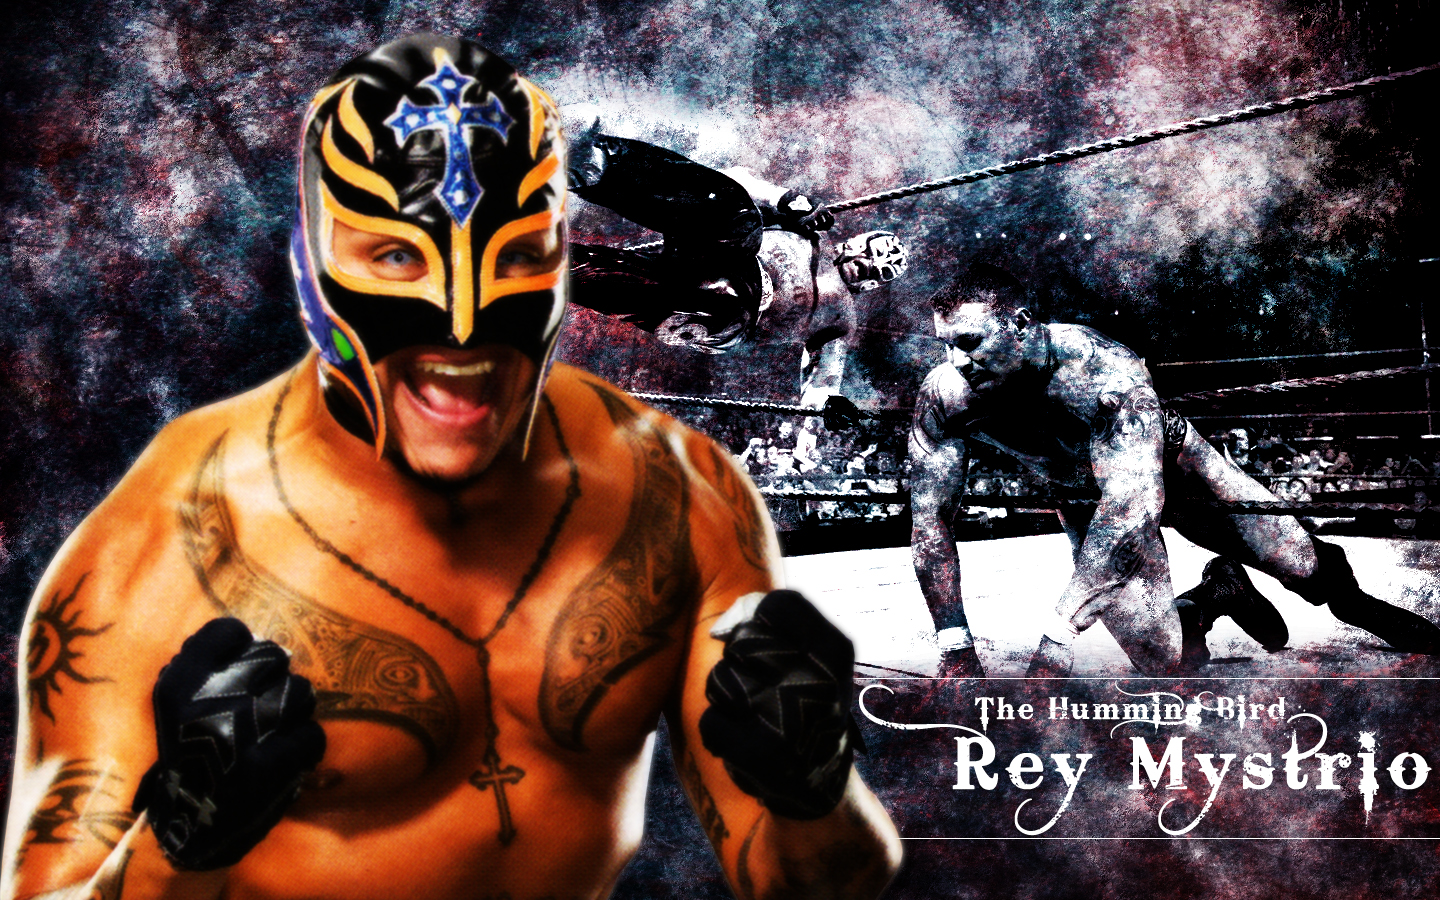 Rey Mysterio 619 wallpapers ~ WWE Superstars,WWE wallpapers,WWE ...